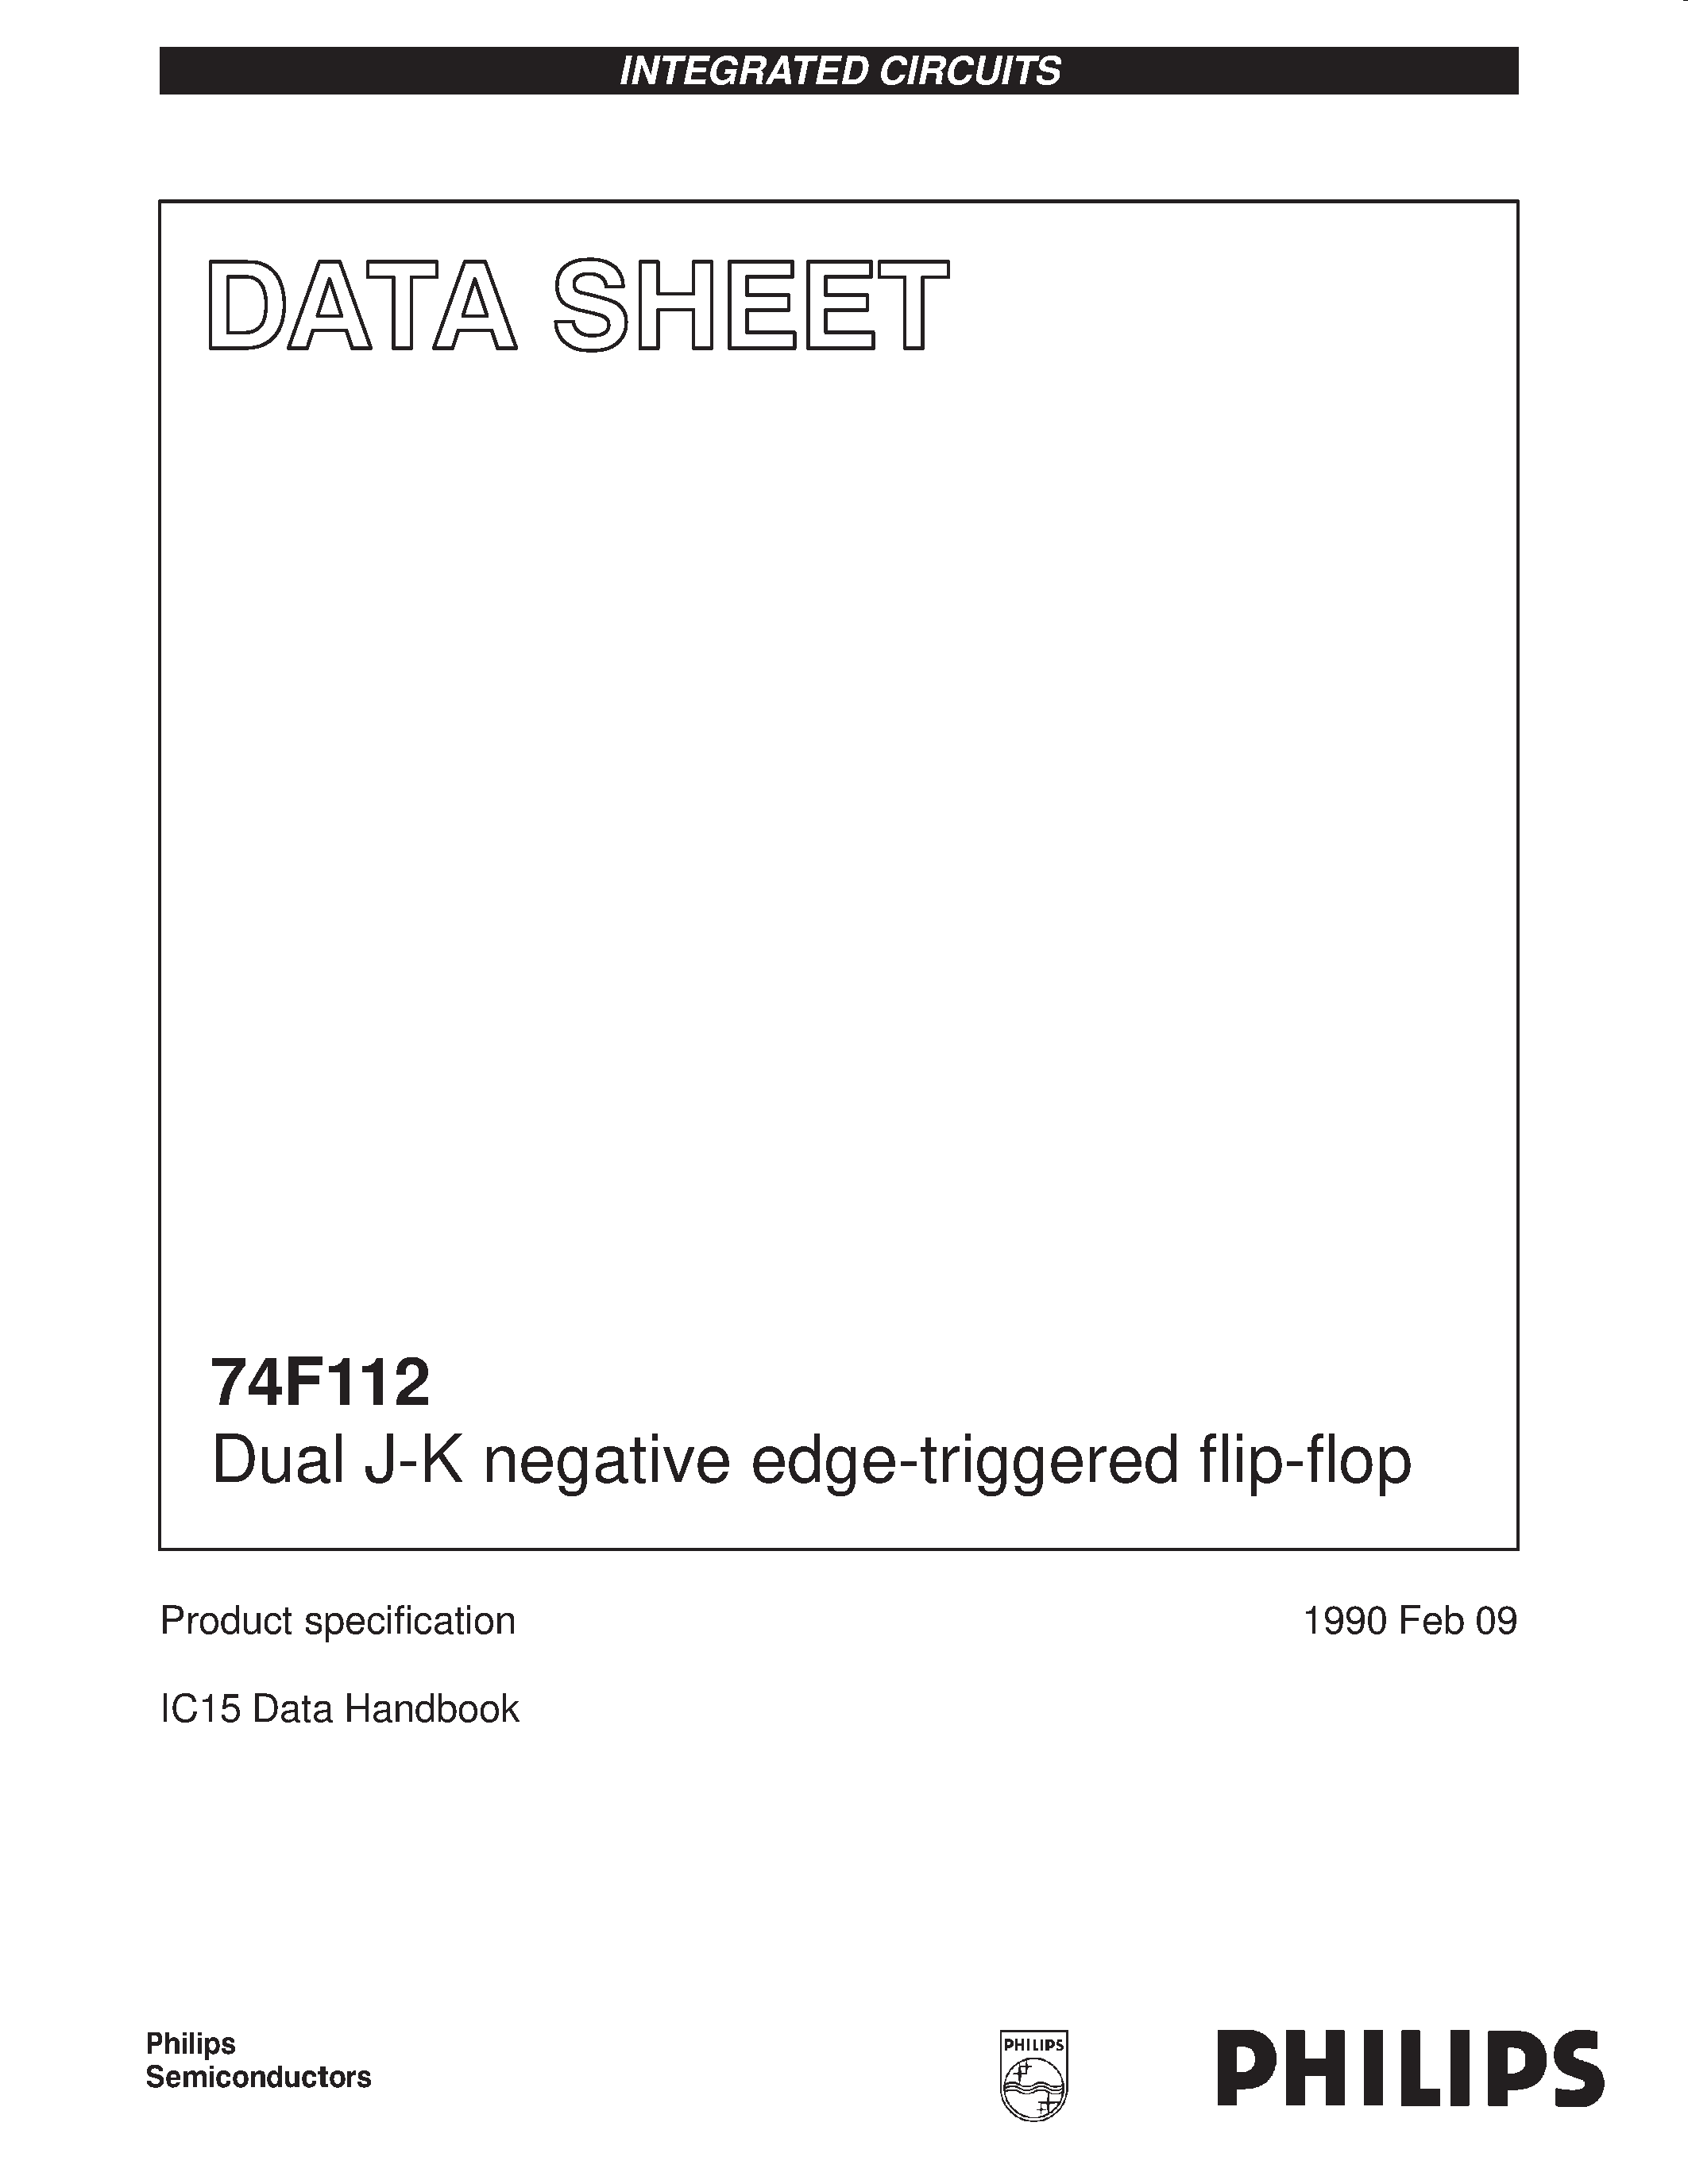 Datasheet 74F112 - Dual J-K negative edge-triggered flip-flop page 1